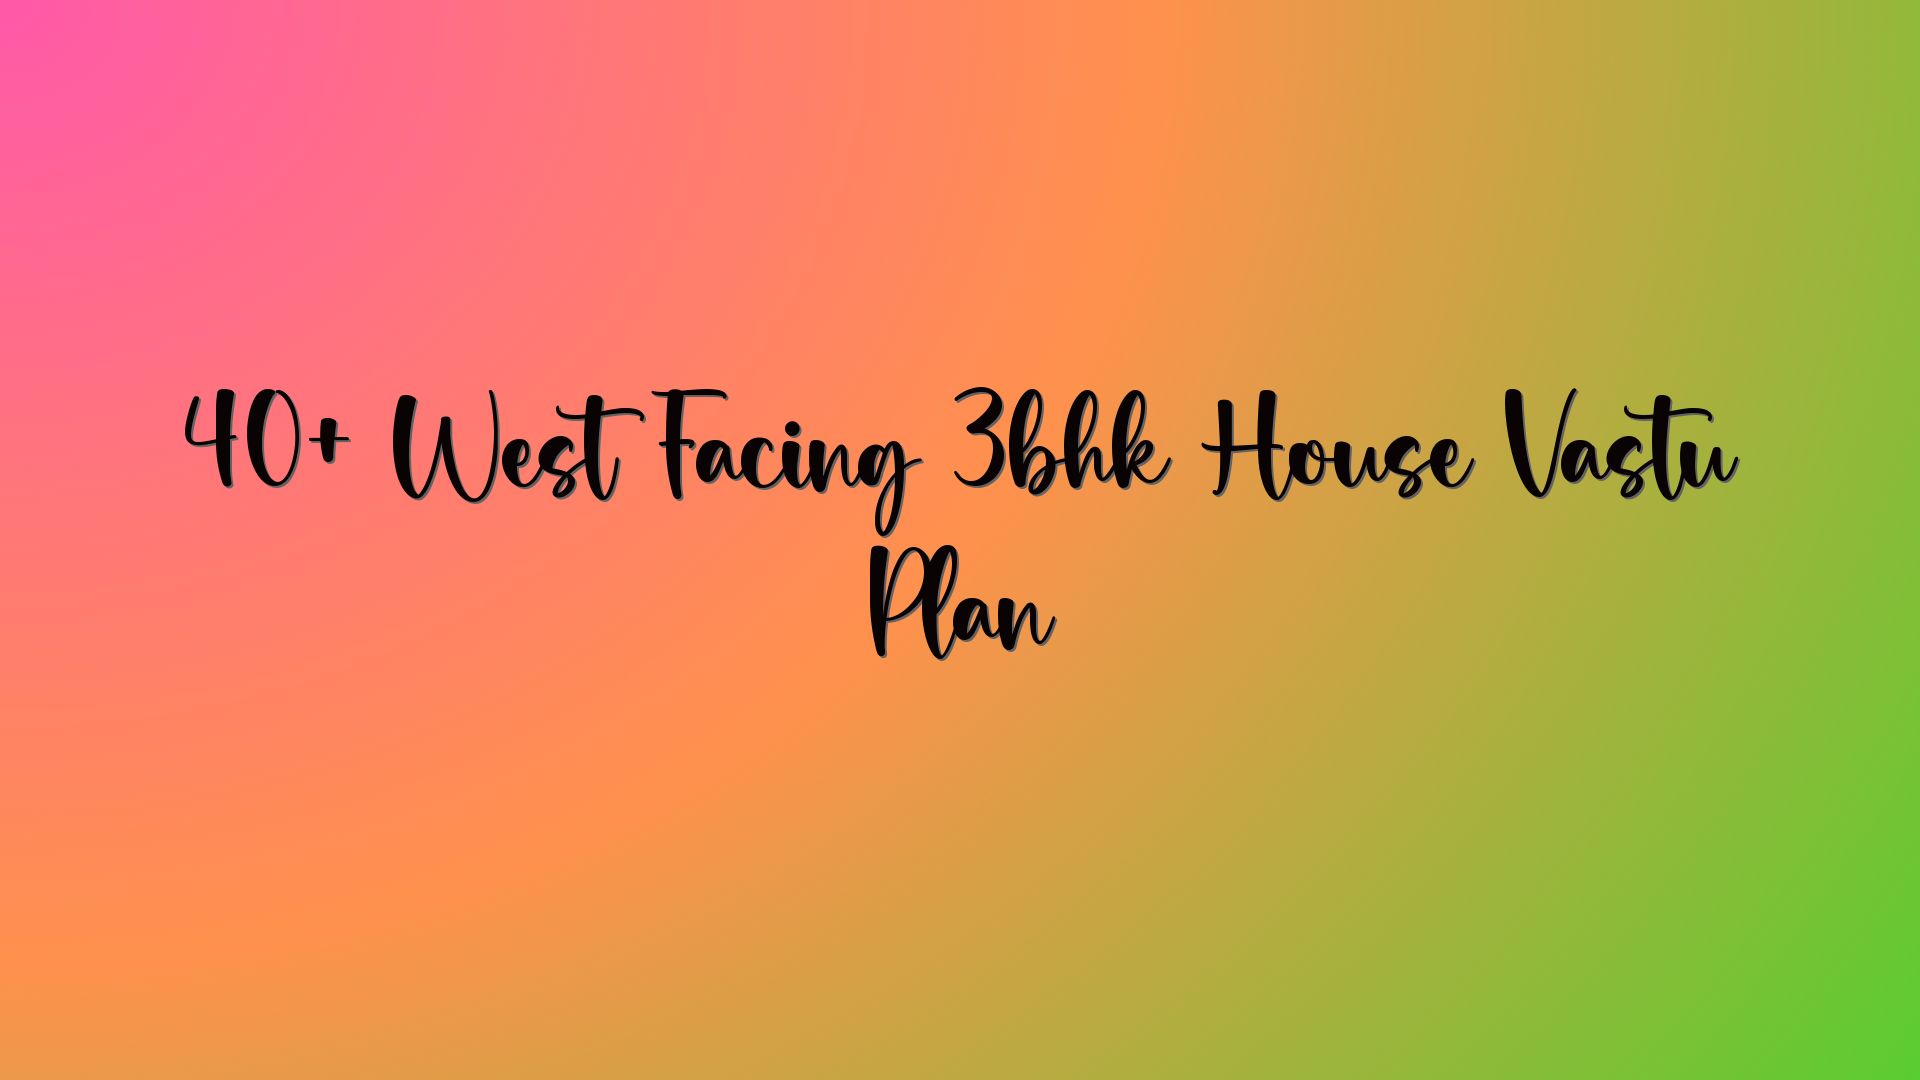 40+ West Facing 3bhk House Vastu Plan